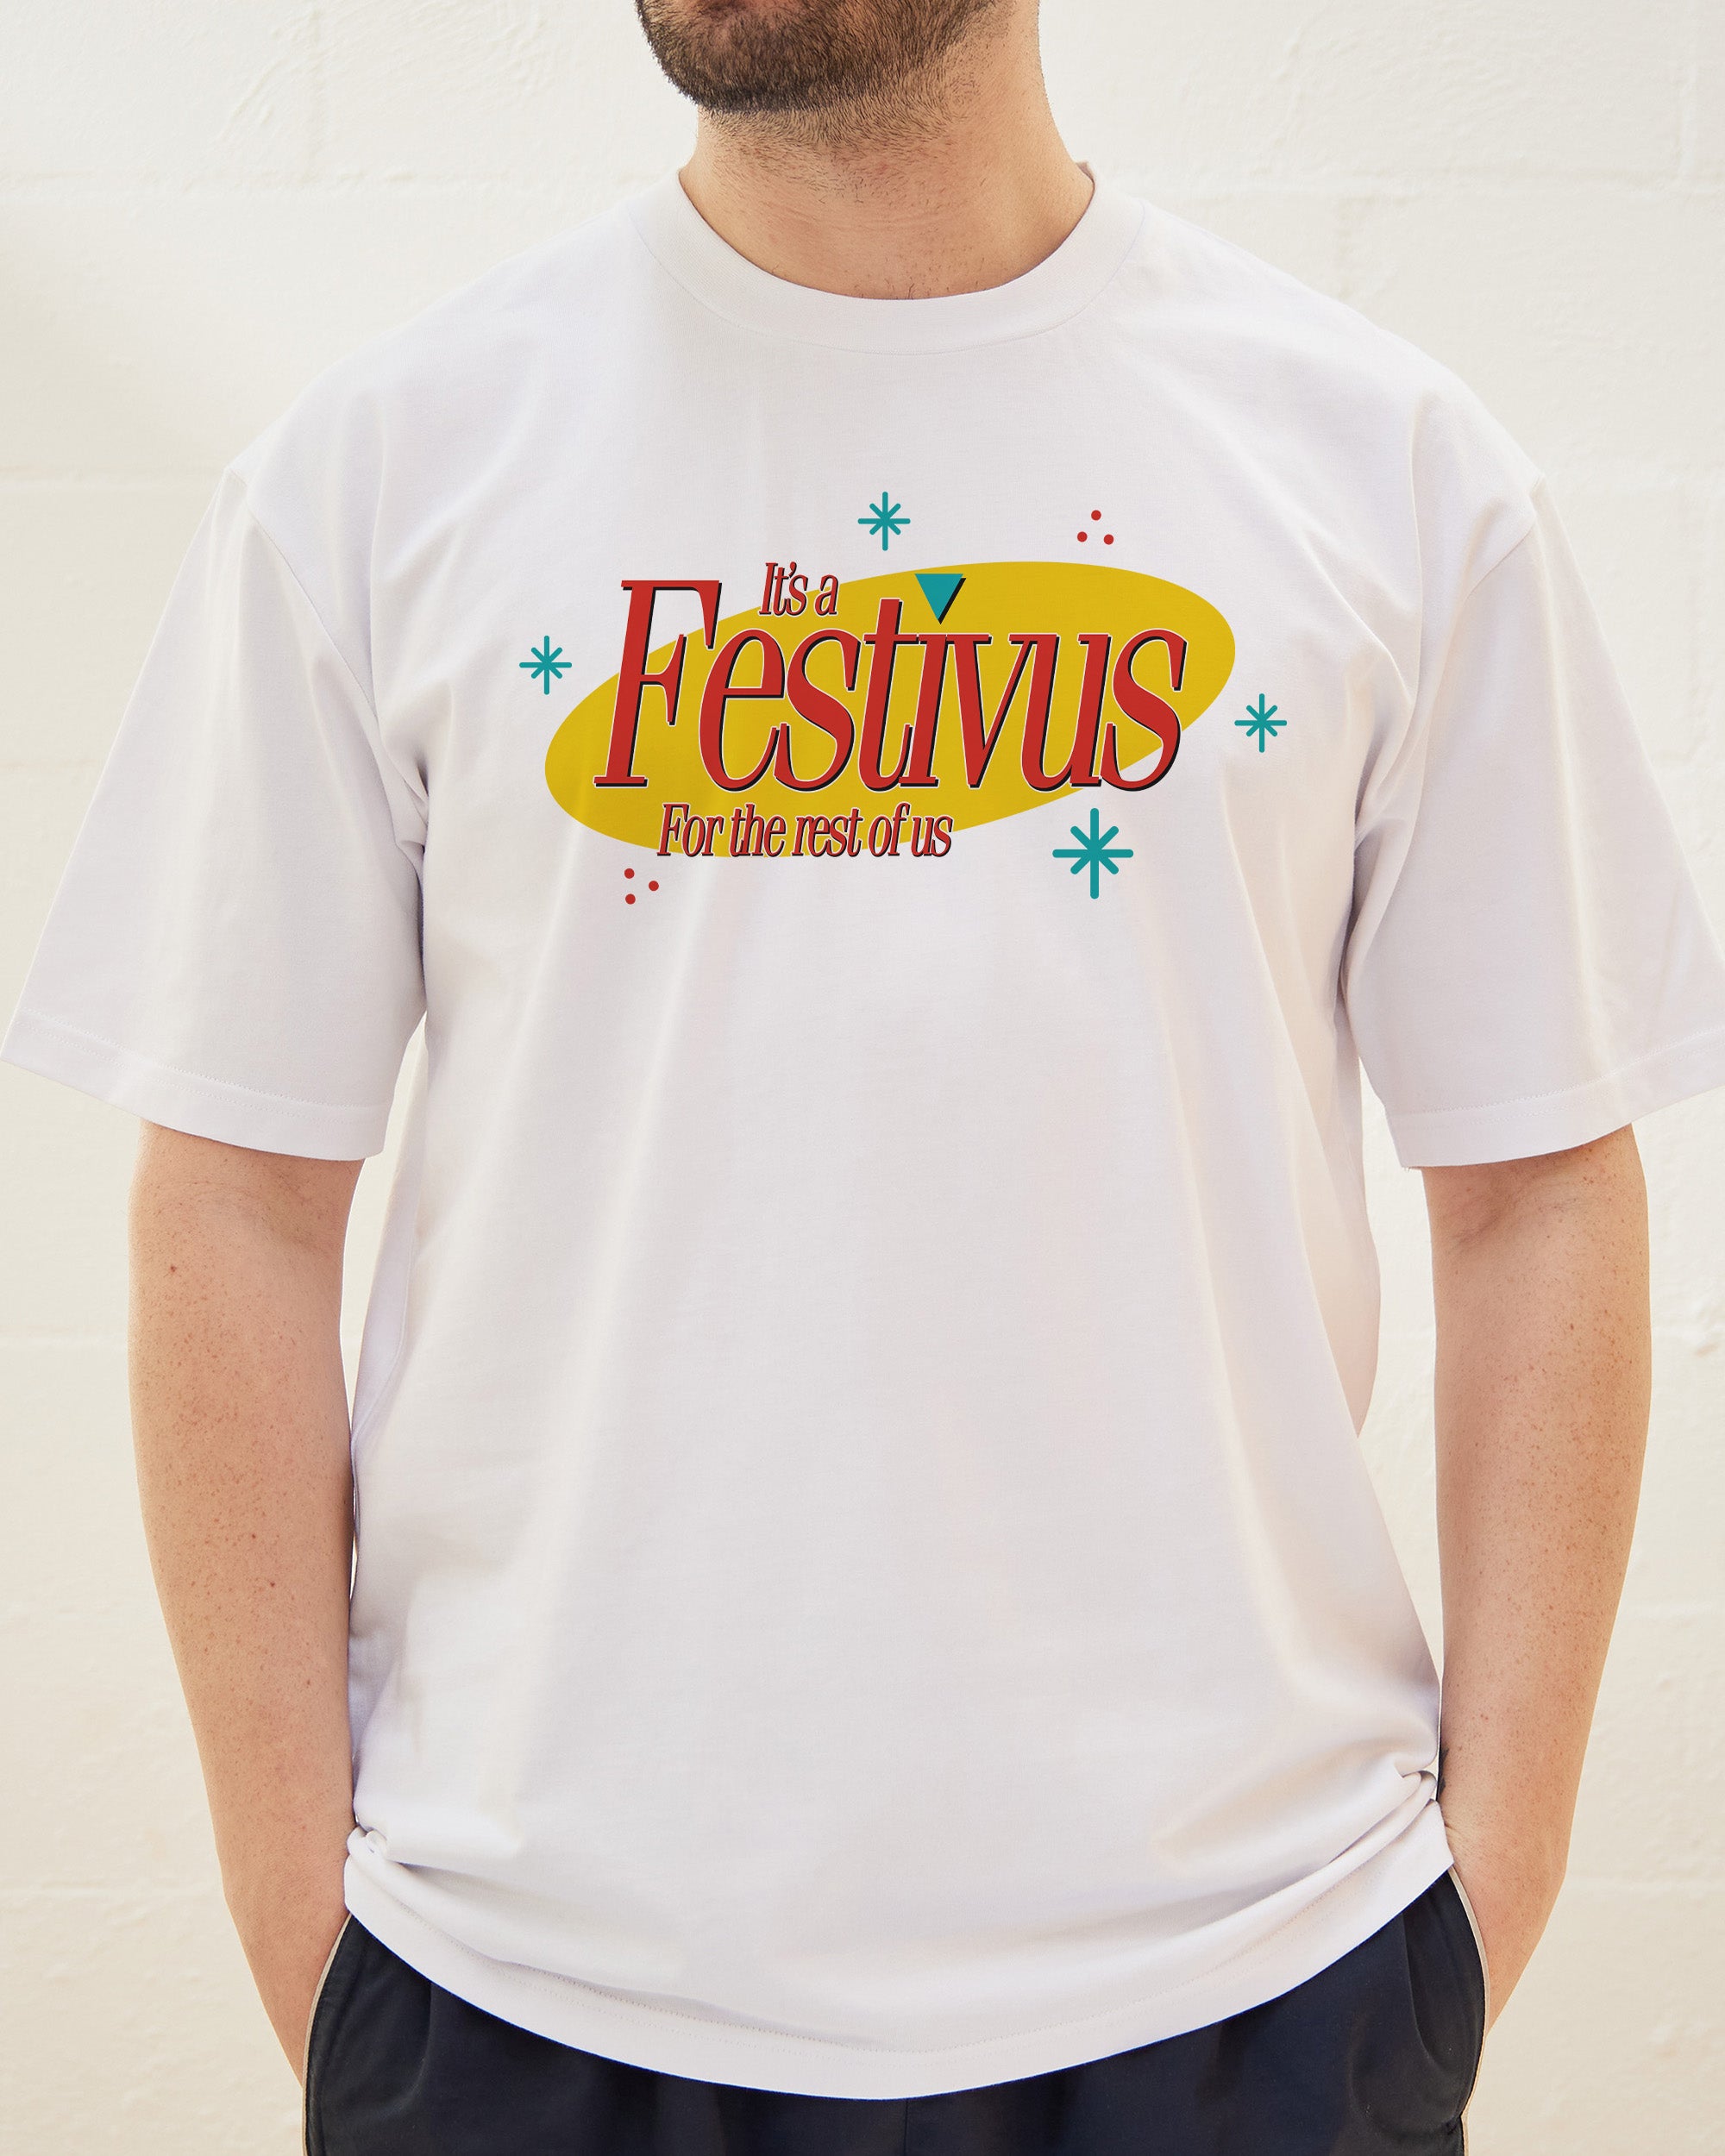 Festivus T-Shirt Australia Online